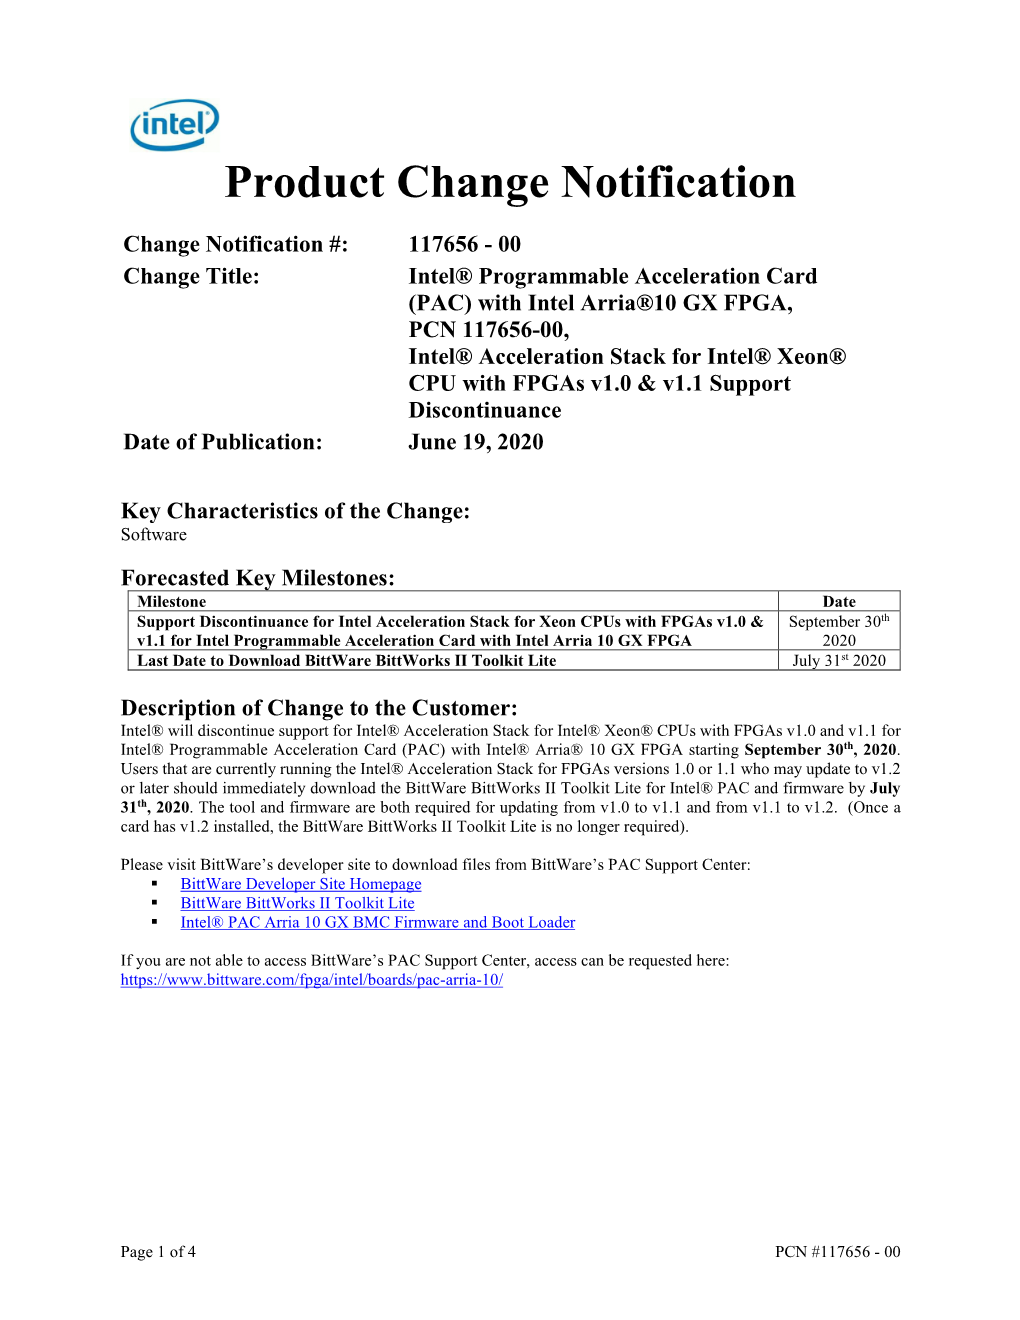 Product Change Notification (PDF)